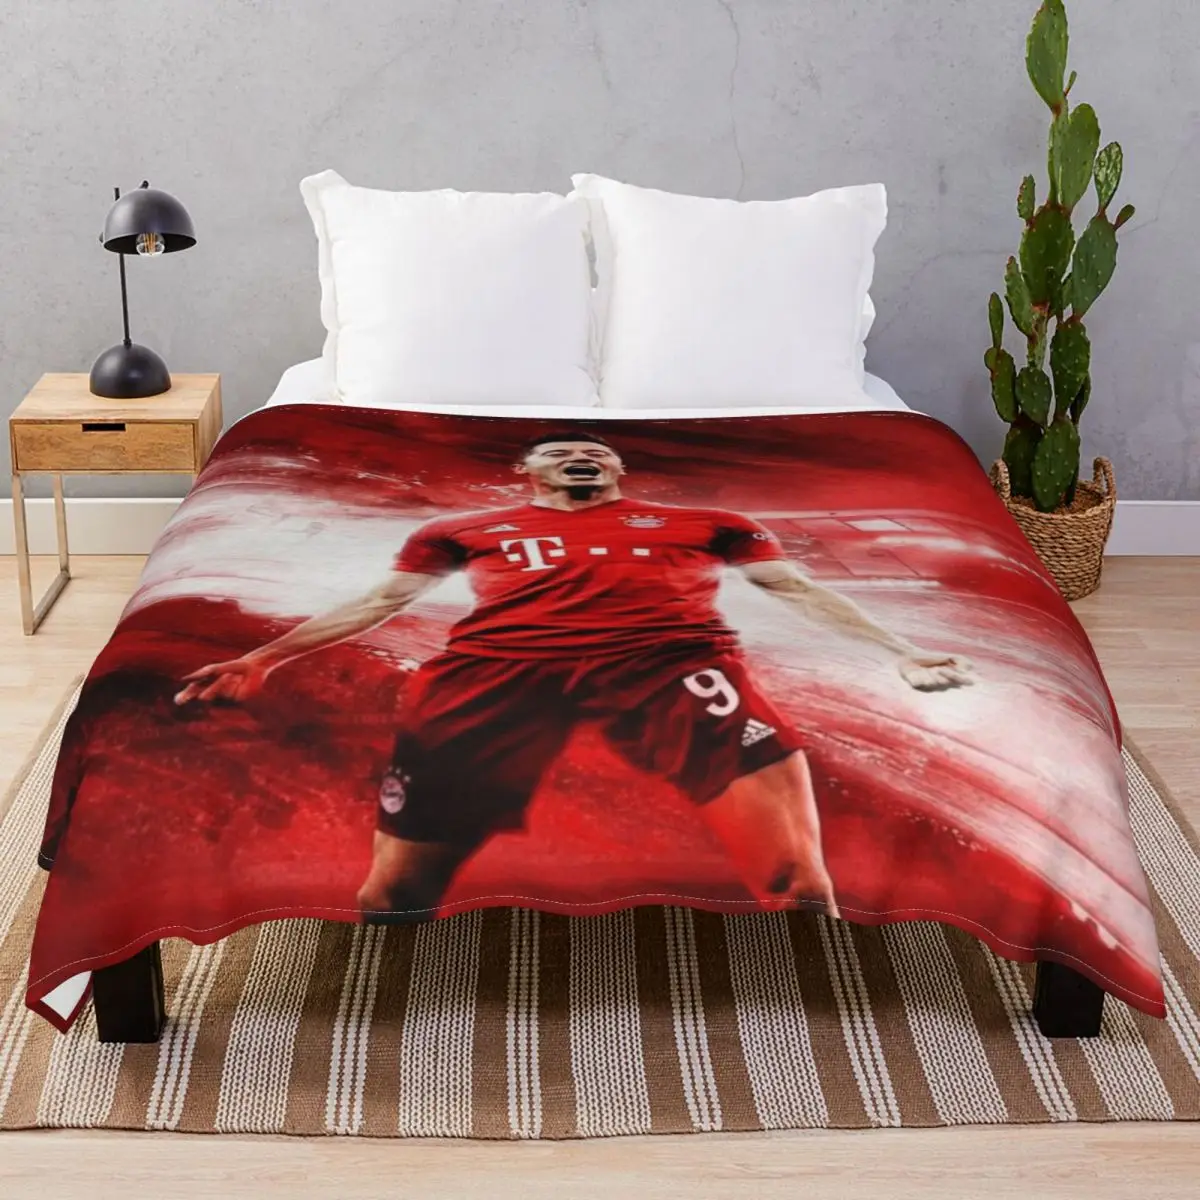 Robert Lewandowski Blankets Coral Fleece Textile Decor Lightweight Throw Blanket for Bed Home Couch Camp Cinema